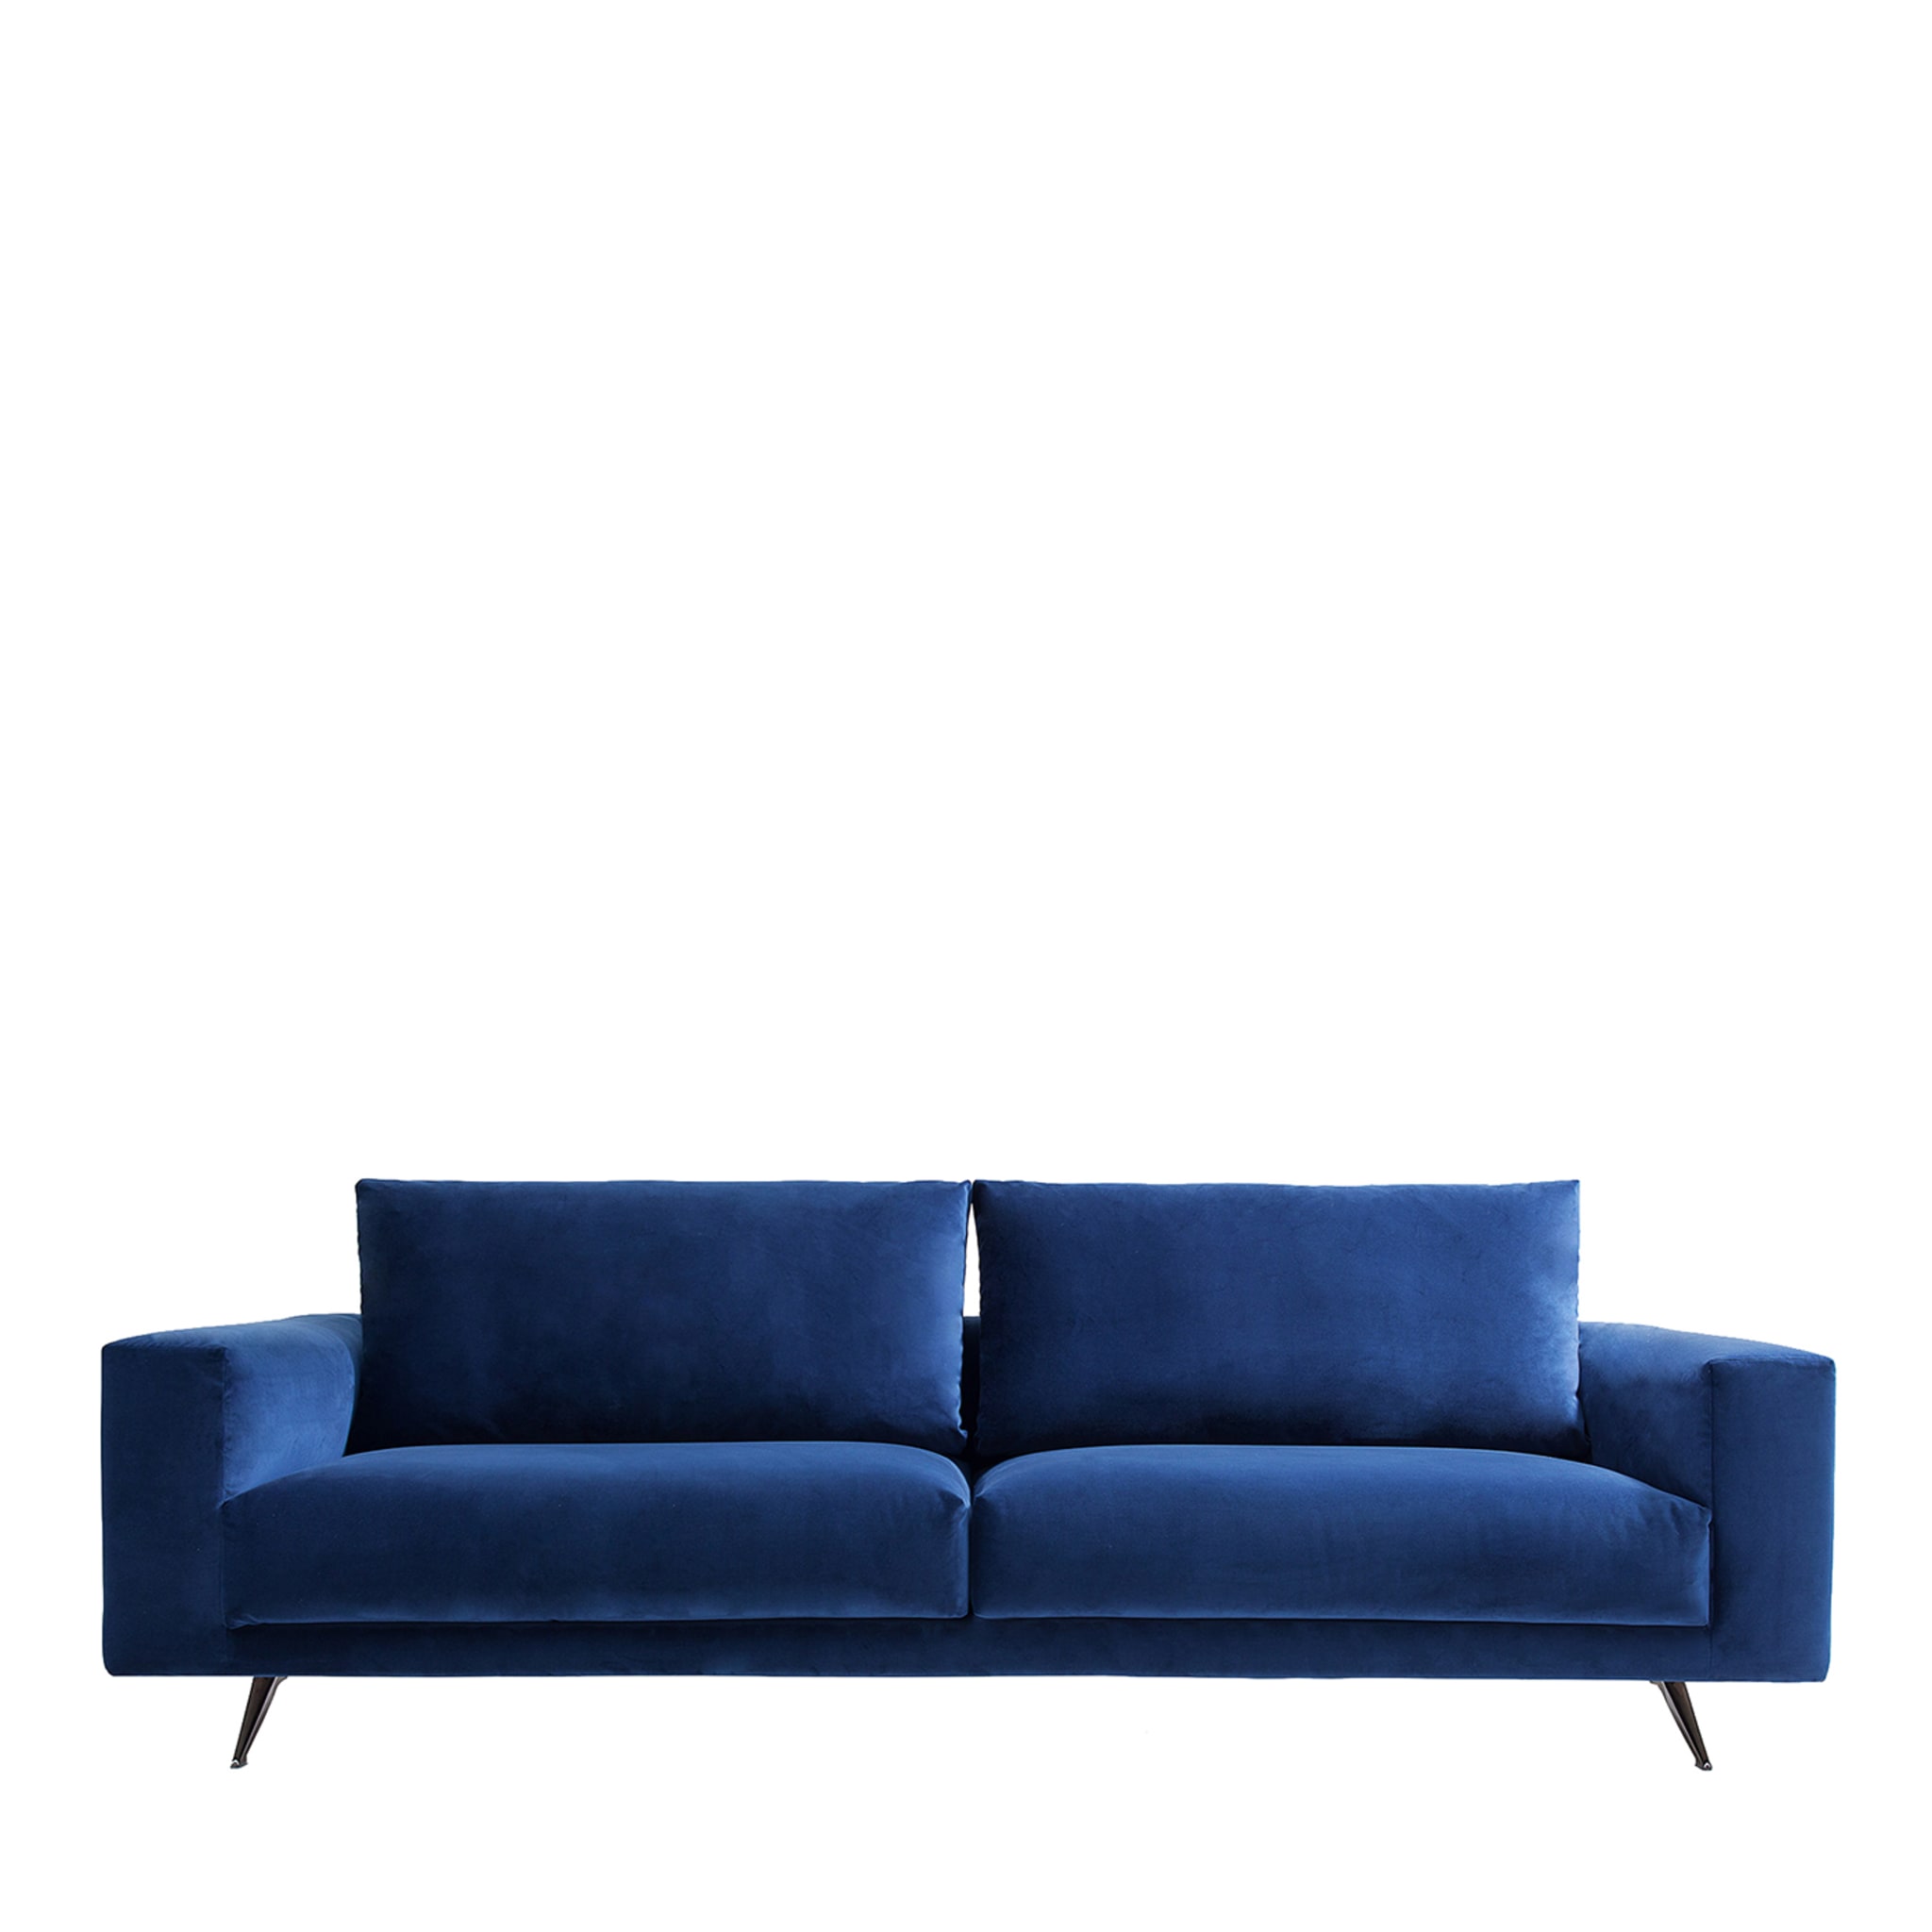 Re Set 580 Blue Sofa with Rectangular Pillows by G. Landoni - Main view